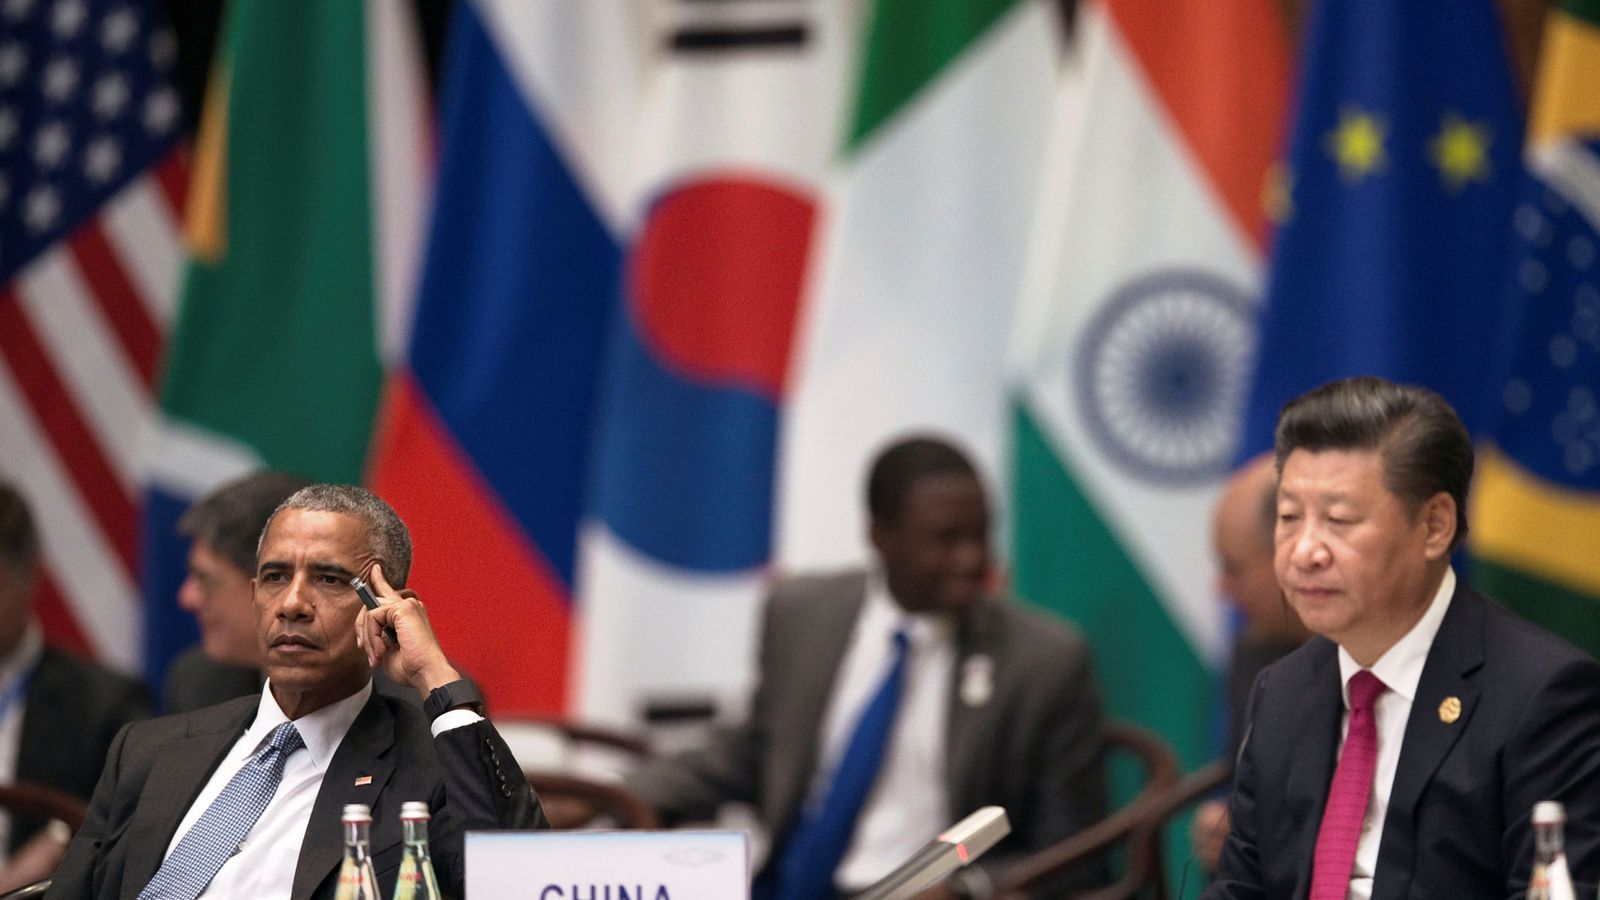 Foto: El presidente Barack Obama durante la ceremonia de apertura de la cumbre del G20 en Hangzhou, China, el 4 de spetiembre de 2016 (Reuters). 